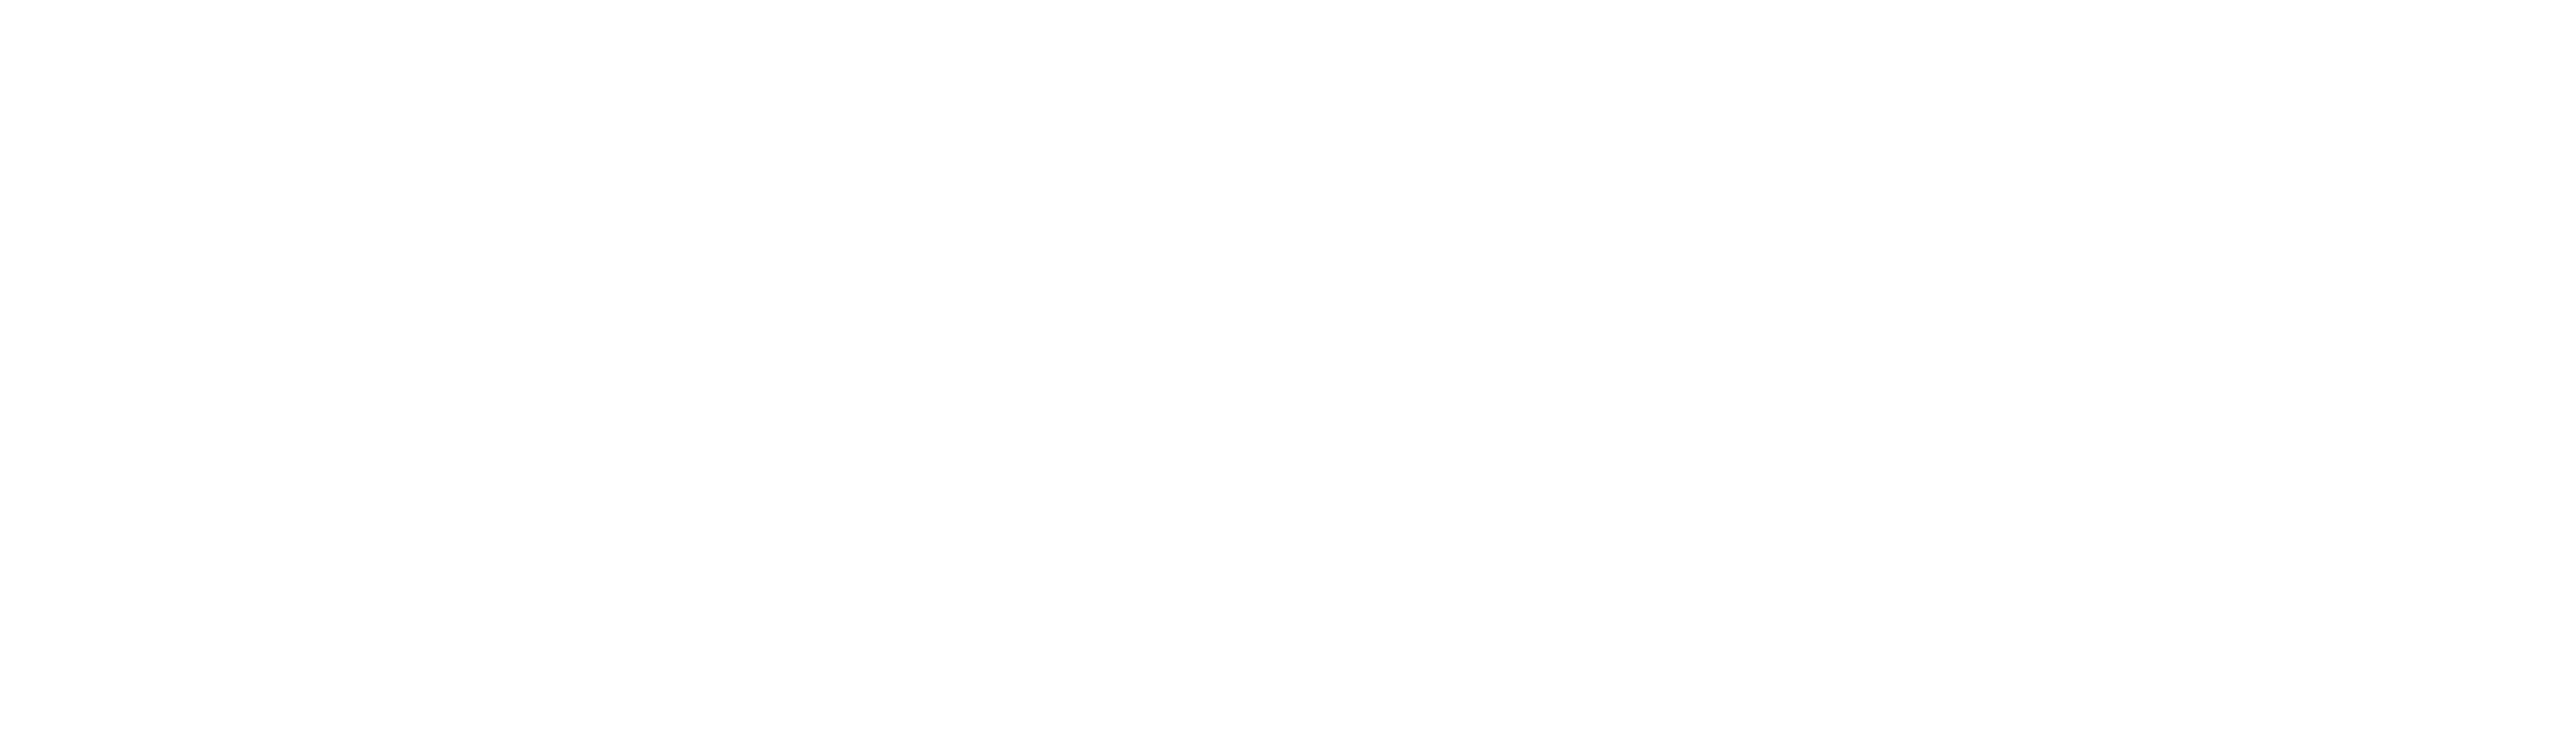 Reserve at Citrus Logos Horizontal White